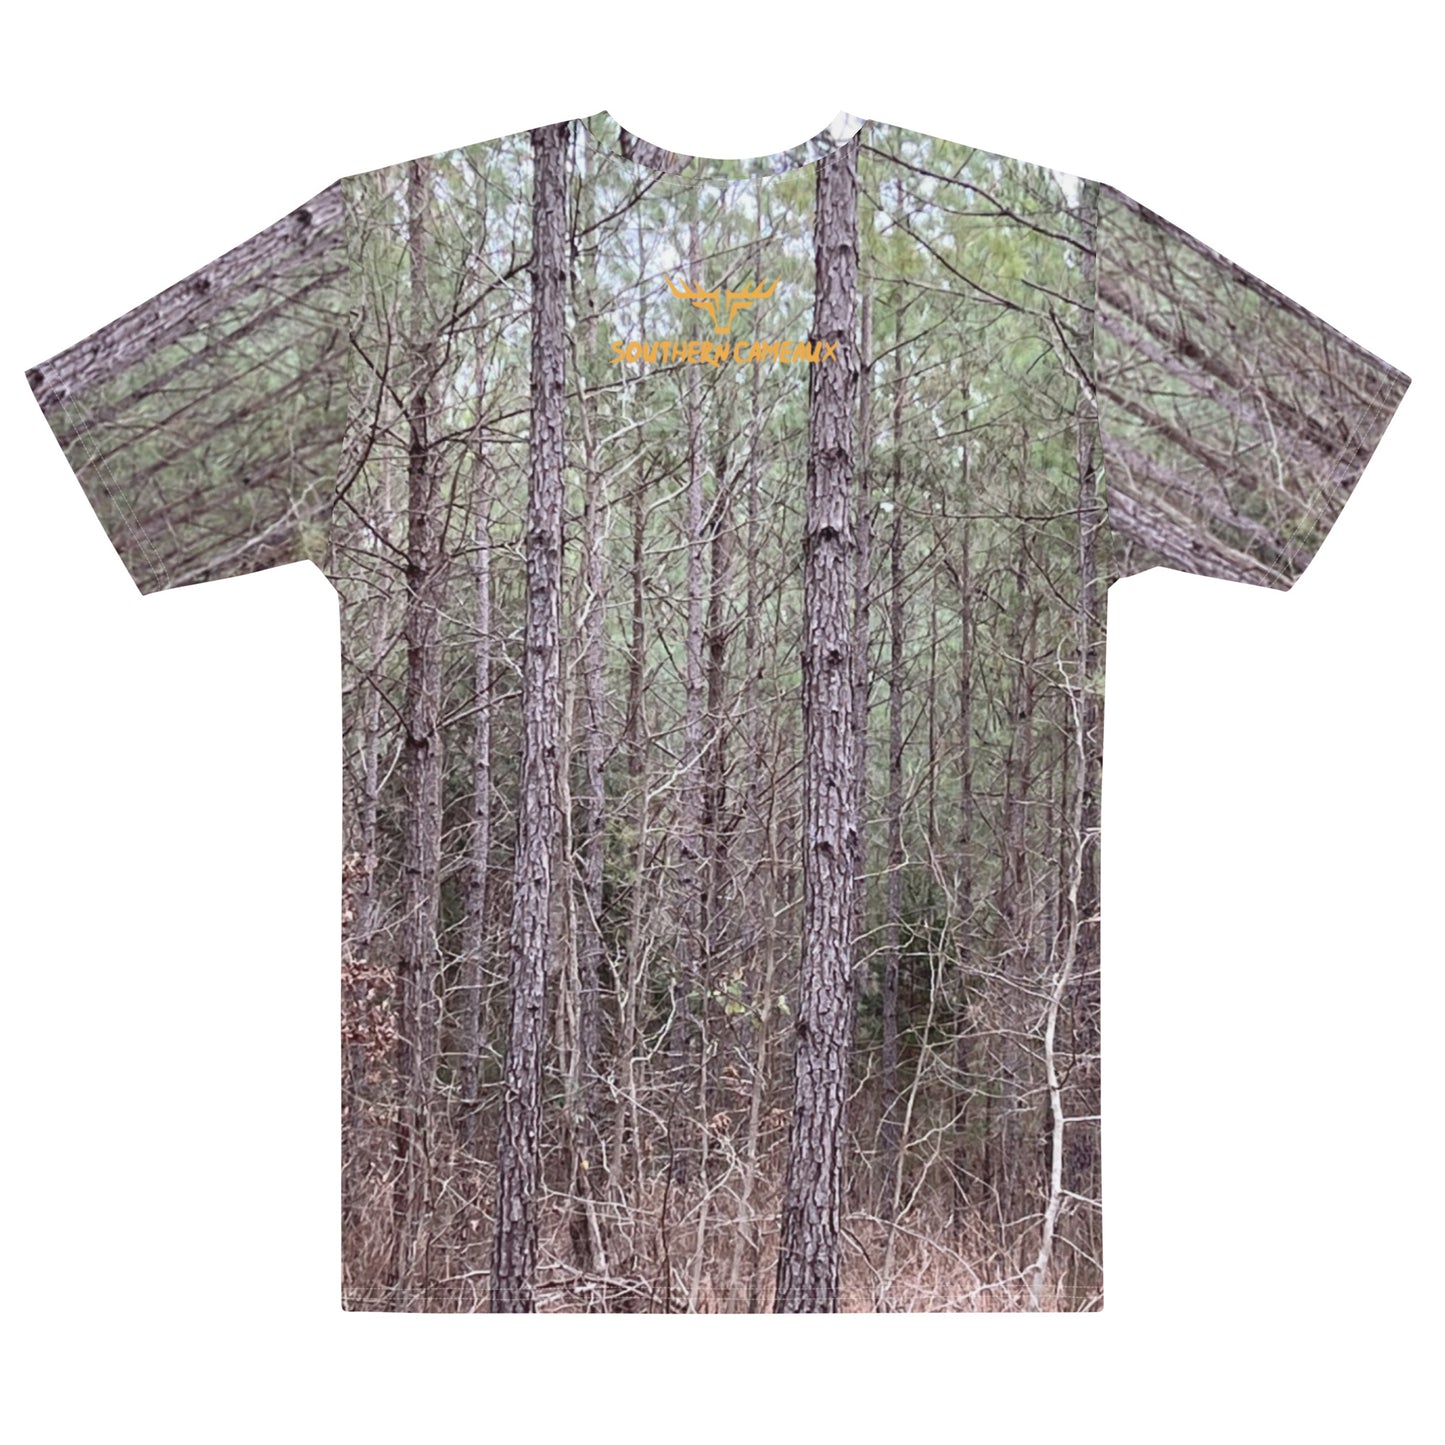 Southern Cameaux Pine t-shirt